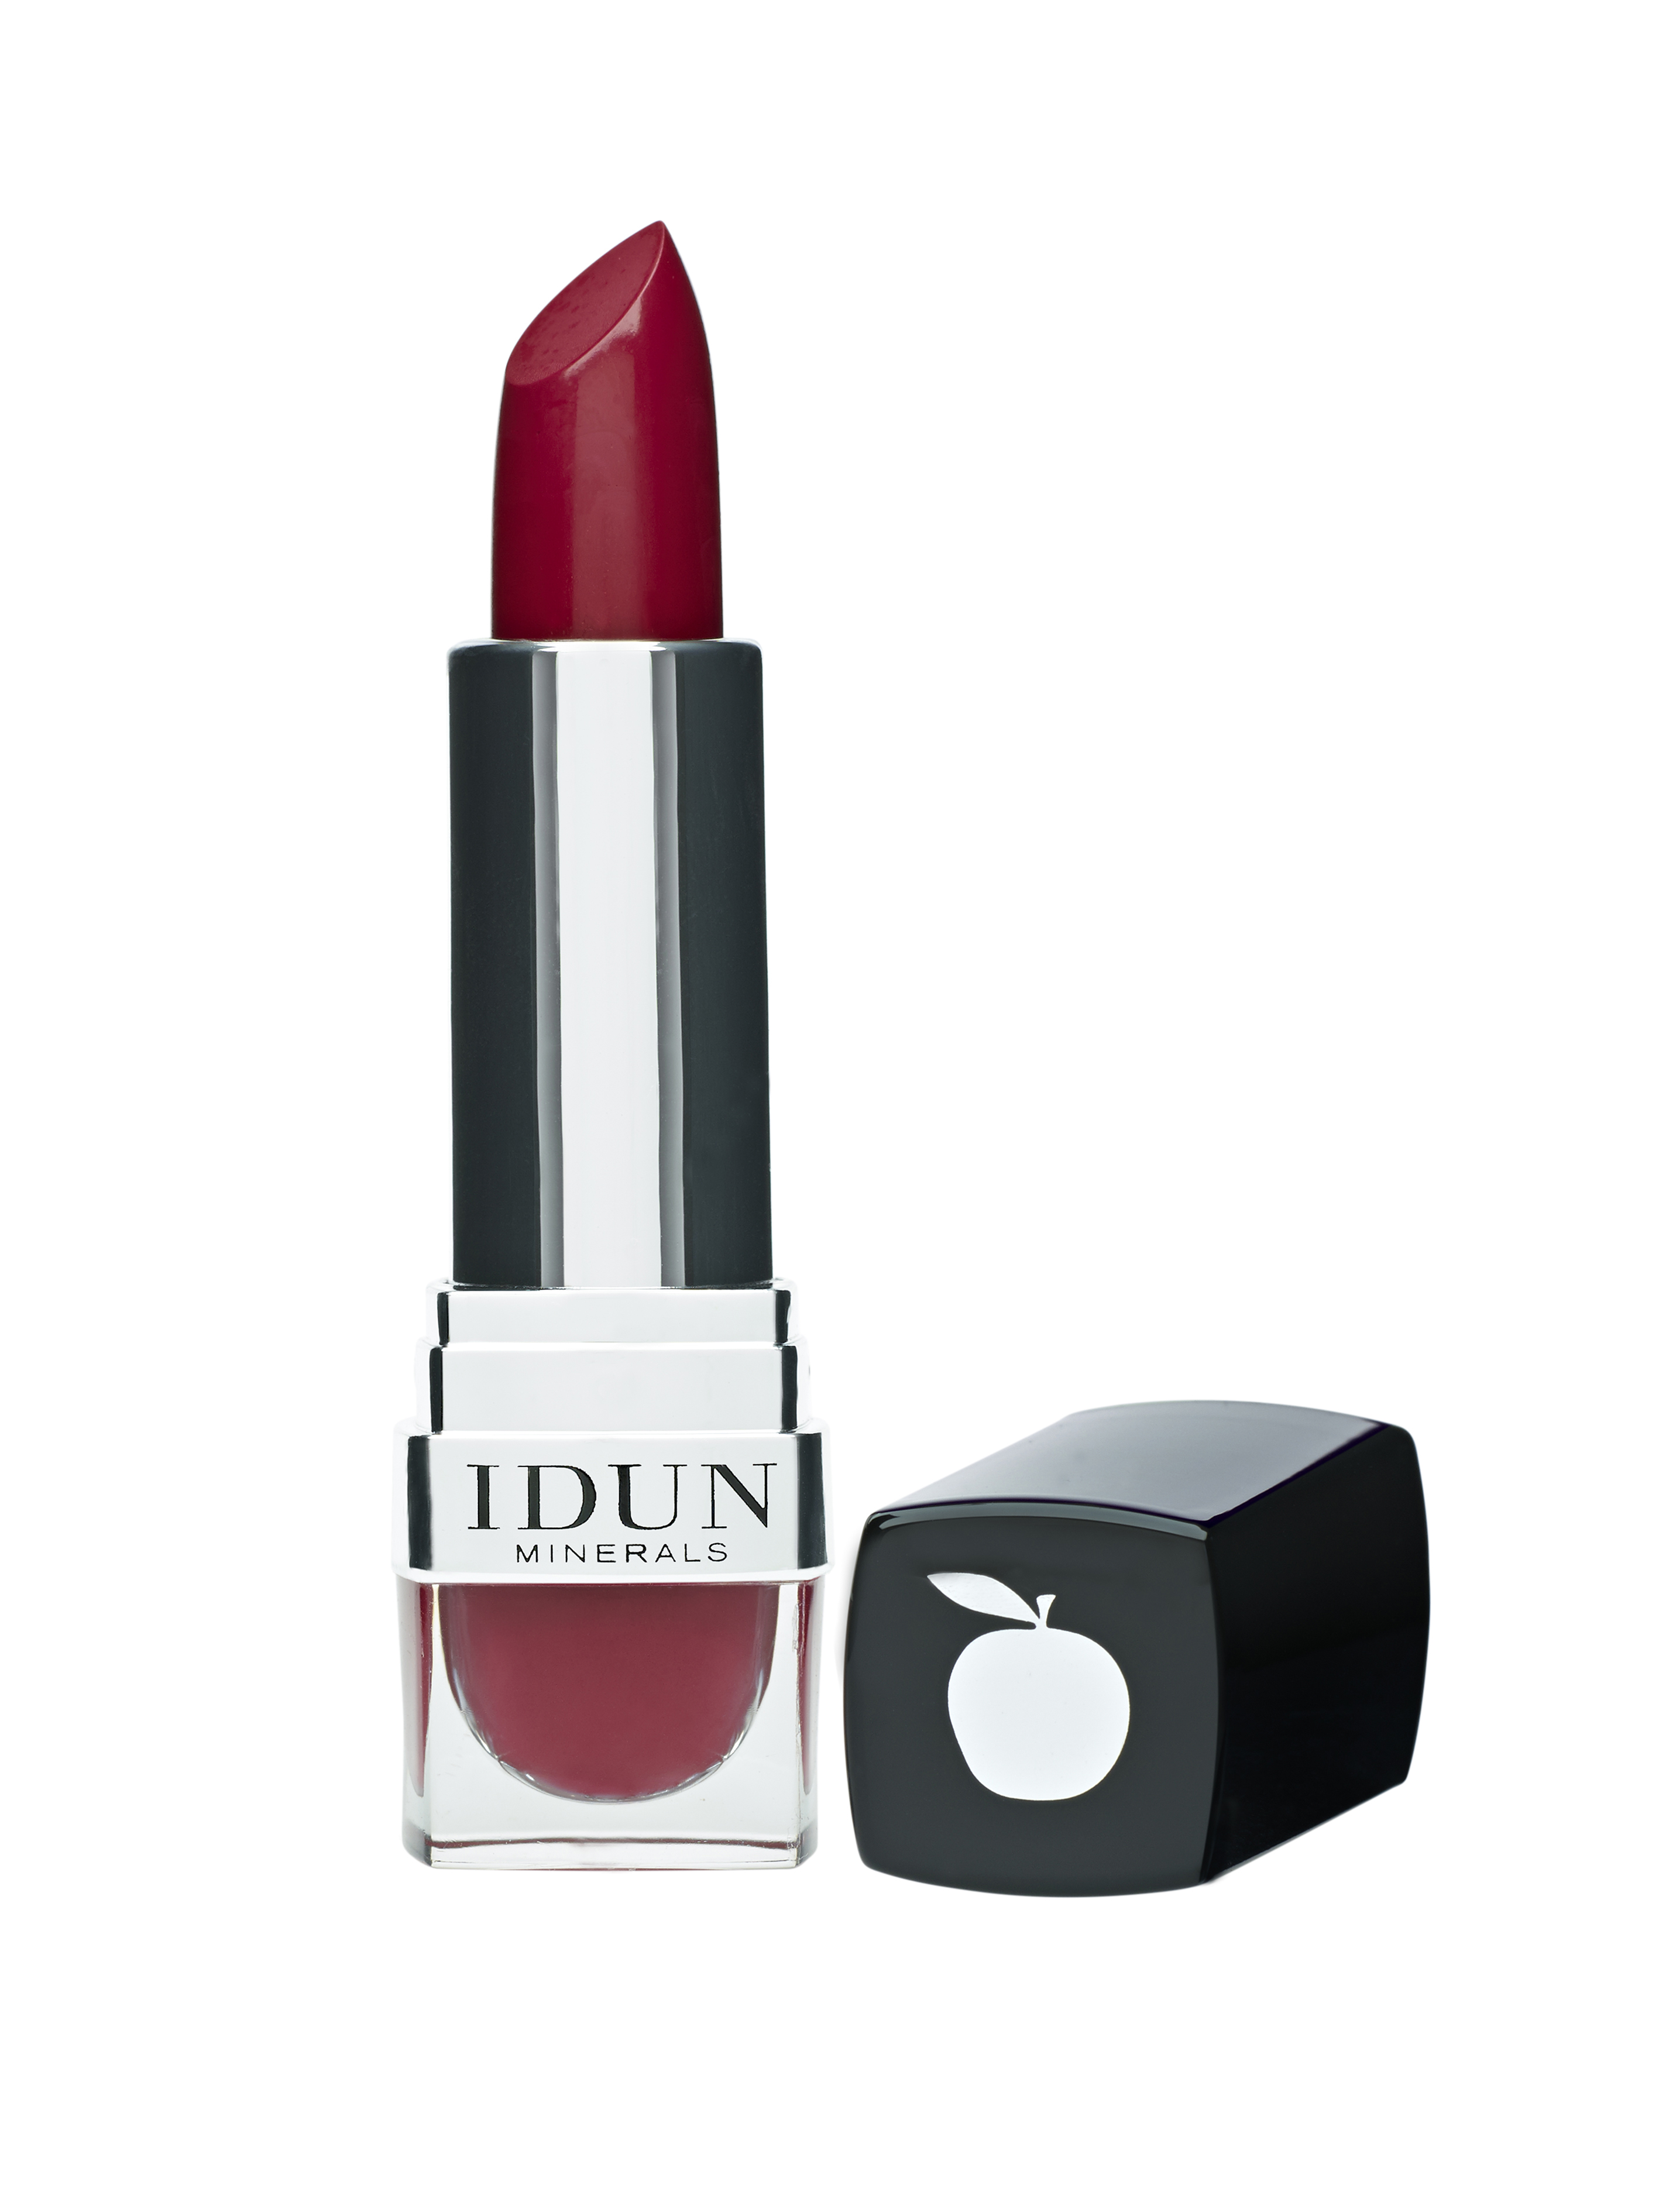 IDUN Minerals Lipstick Vinbär, 4g.